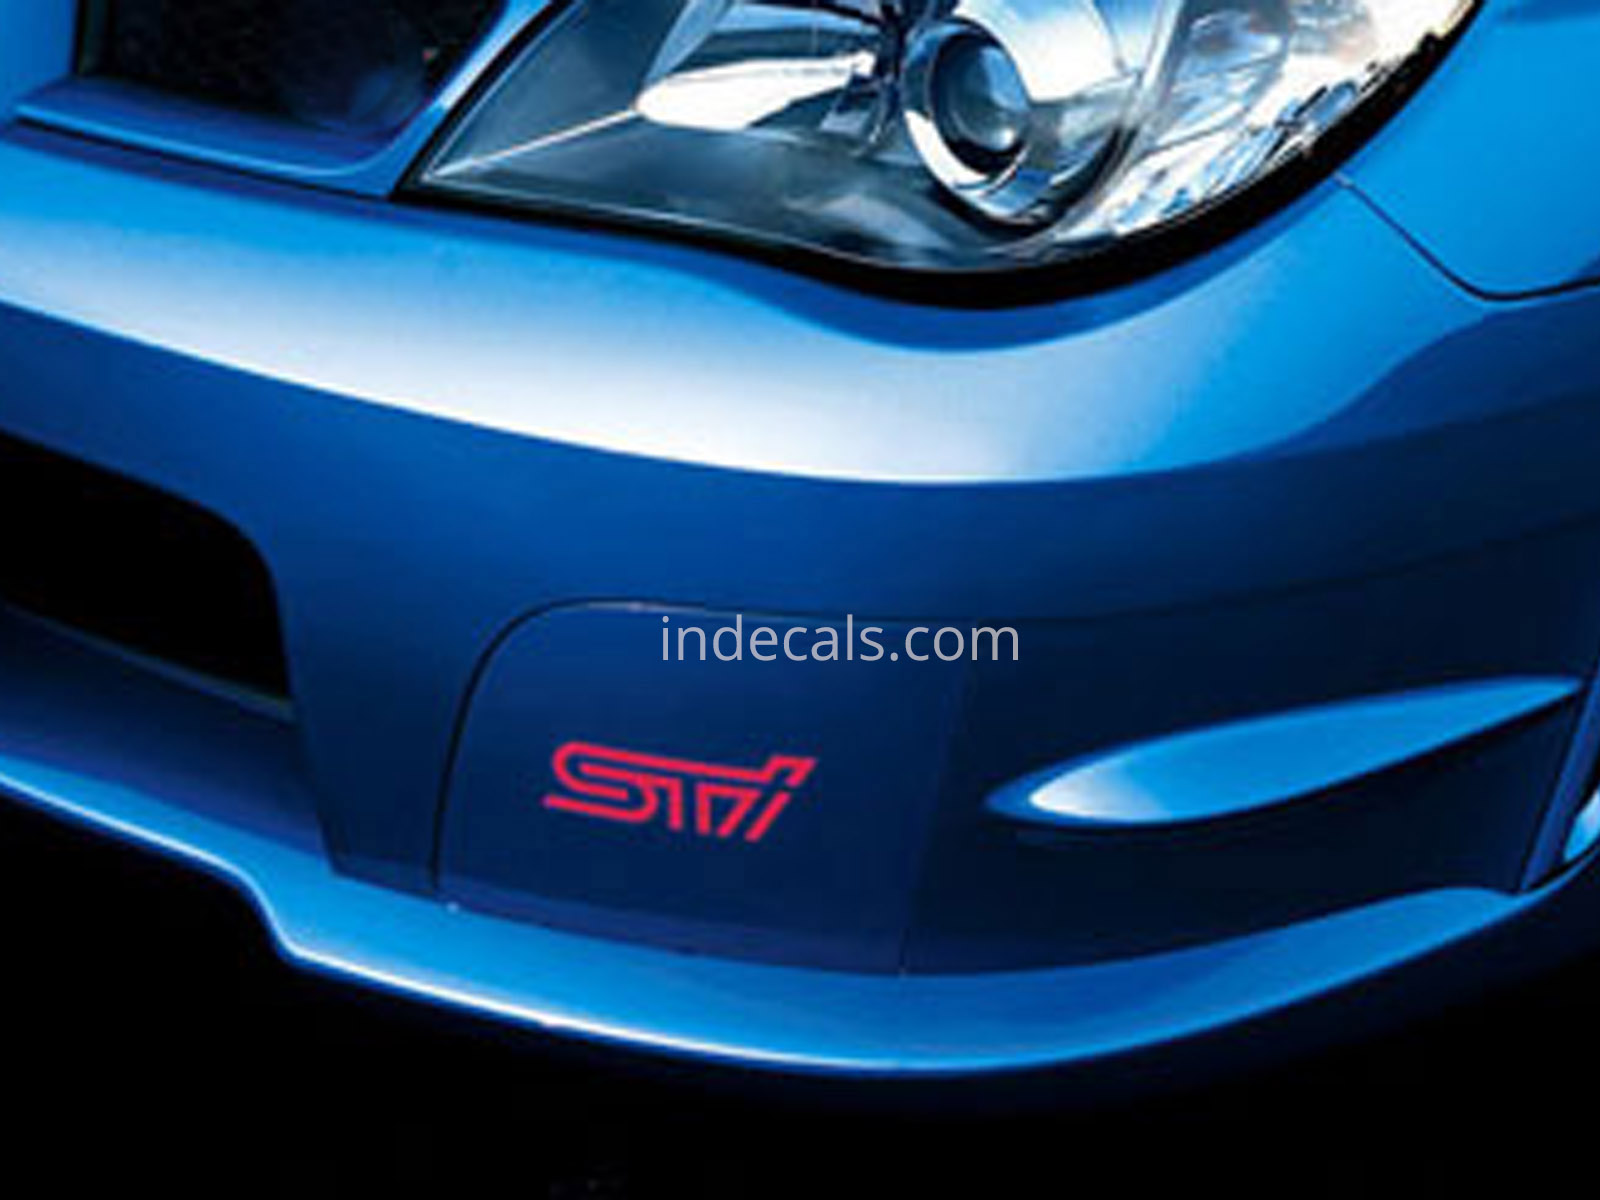 2 x Subaru STI stickers for Front Bumper - Pink